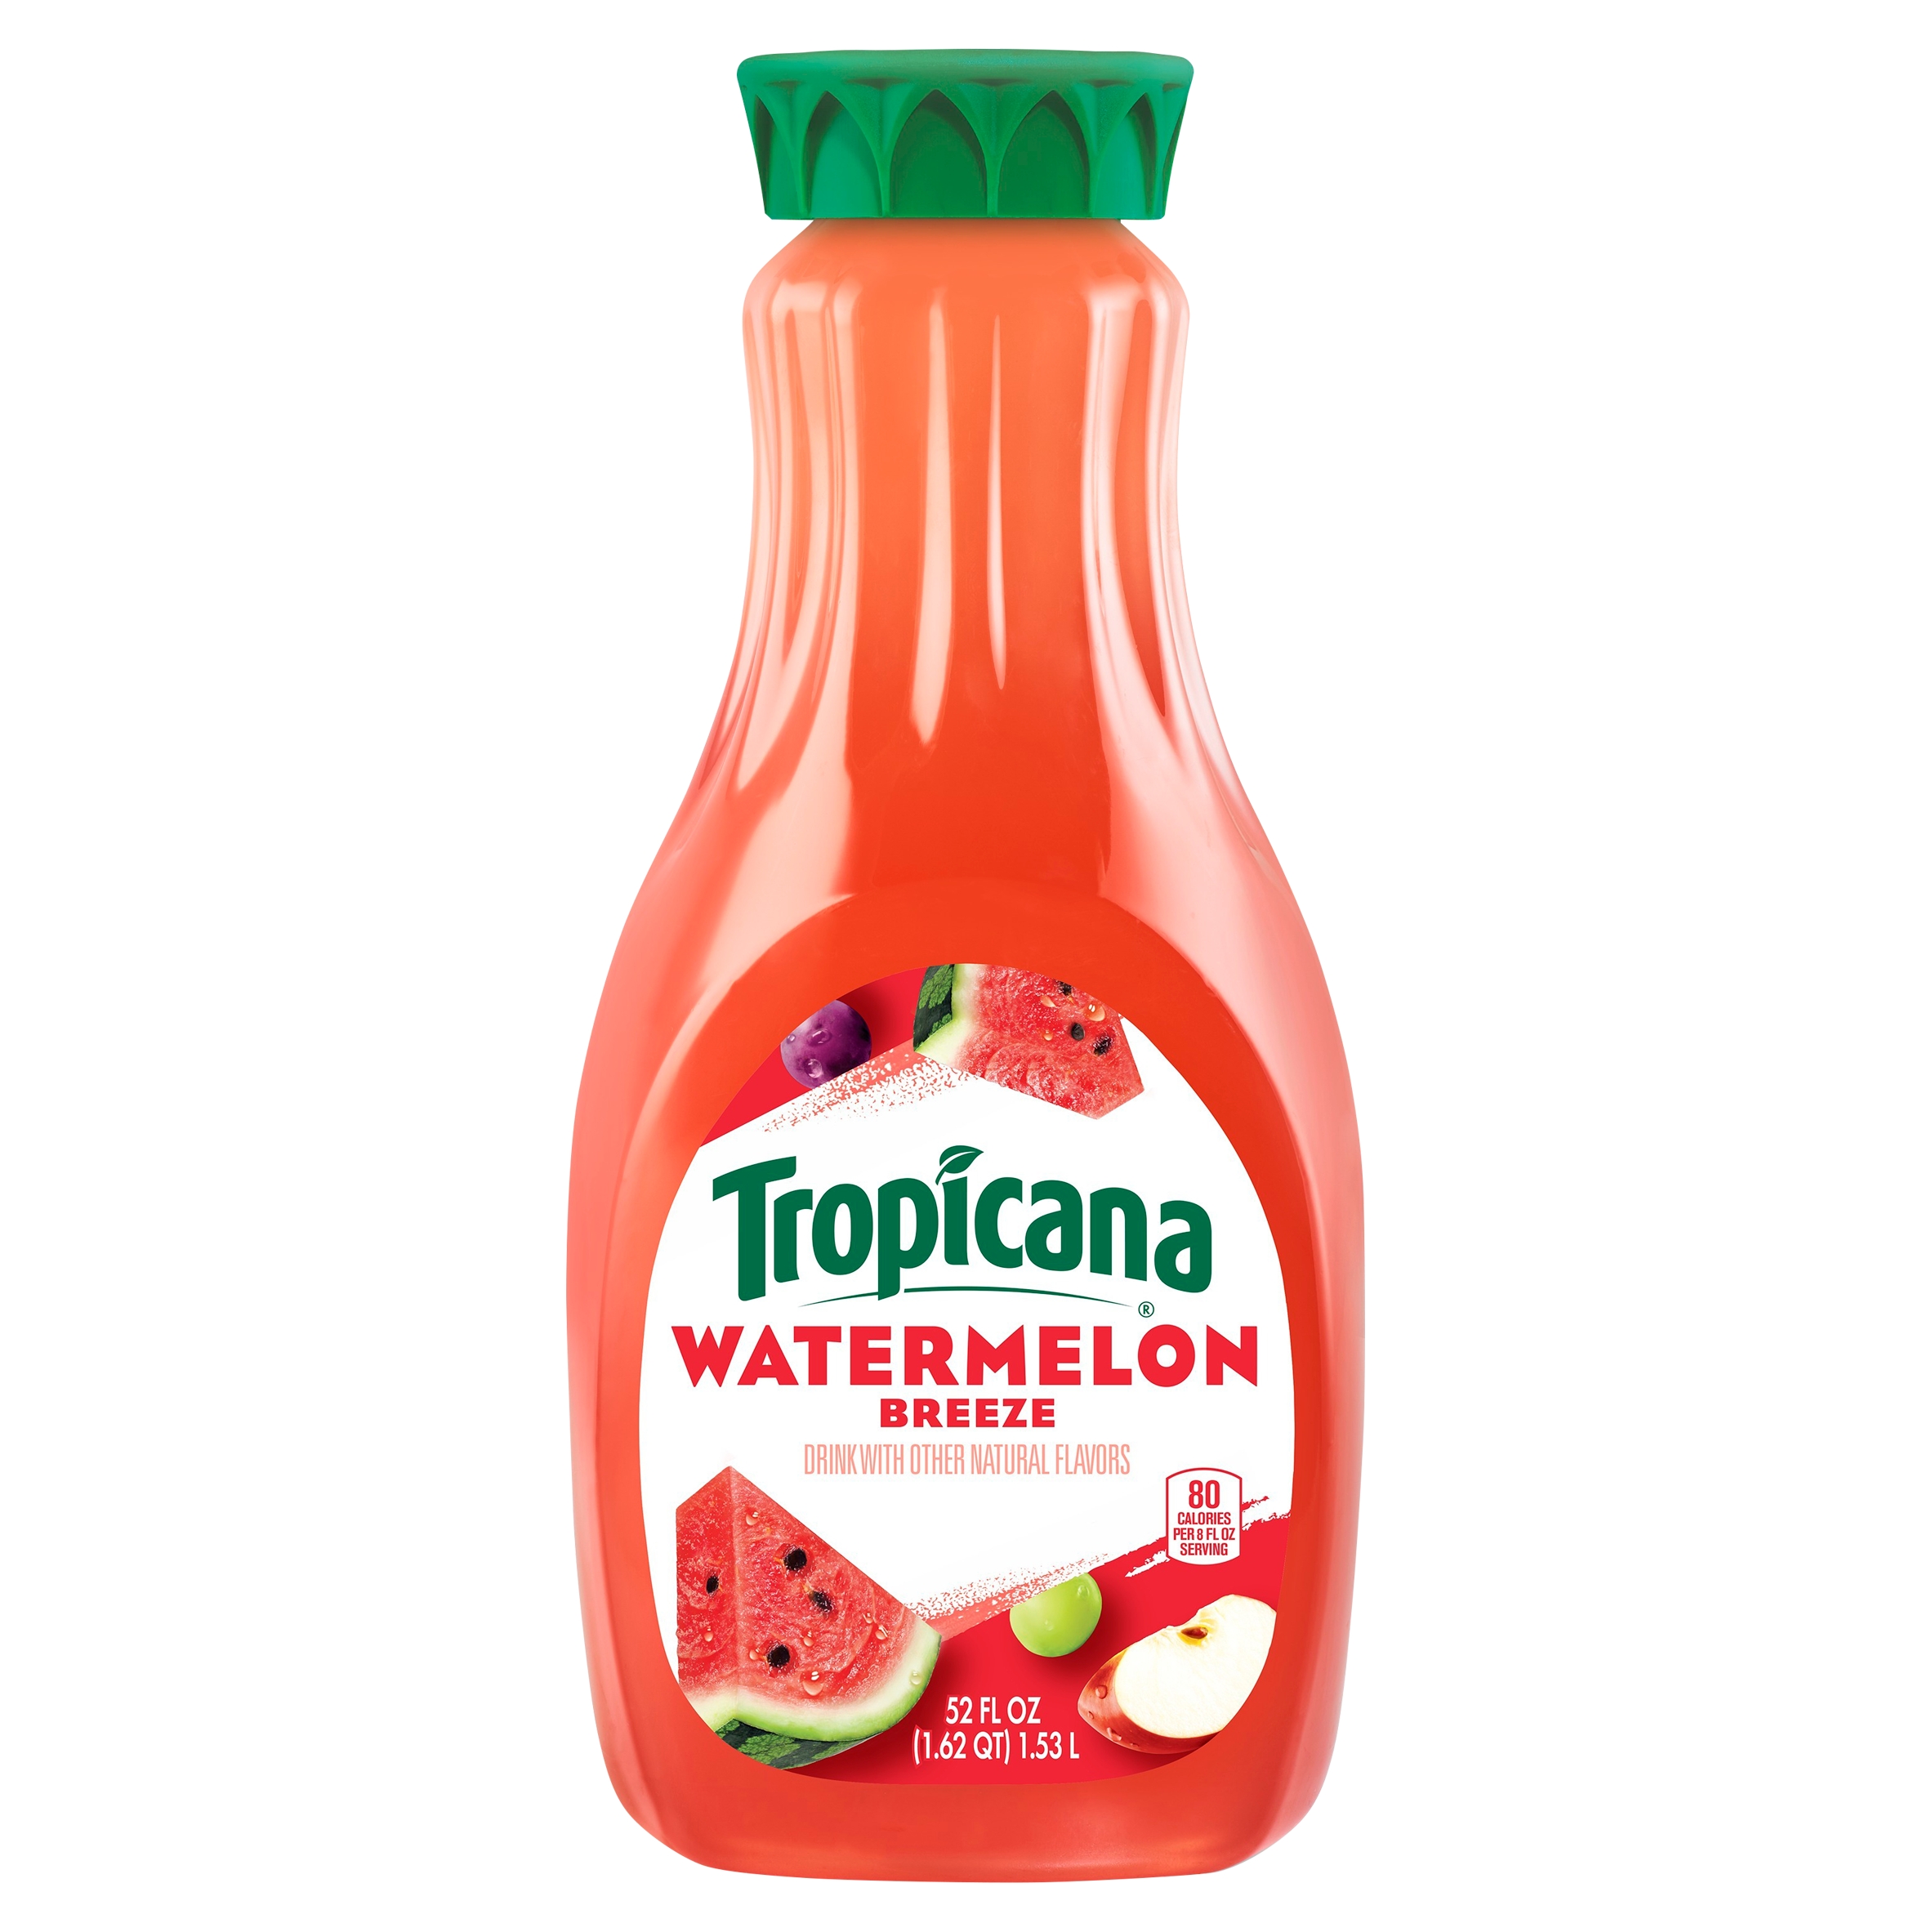 Tropicana Watermelon Breeze Juice Drink, 52 oz Bottle - image 1 of 8